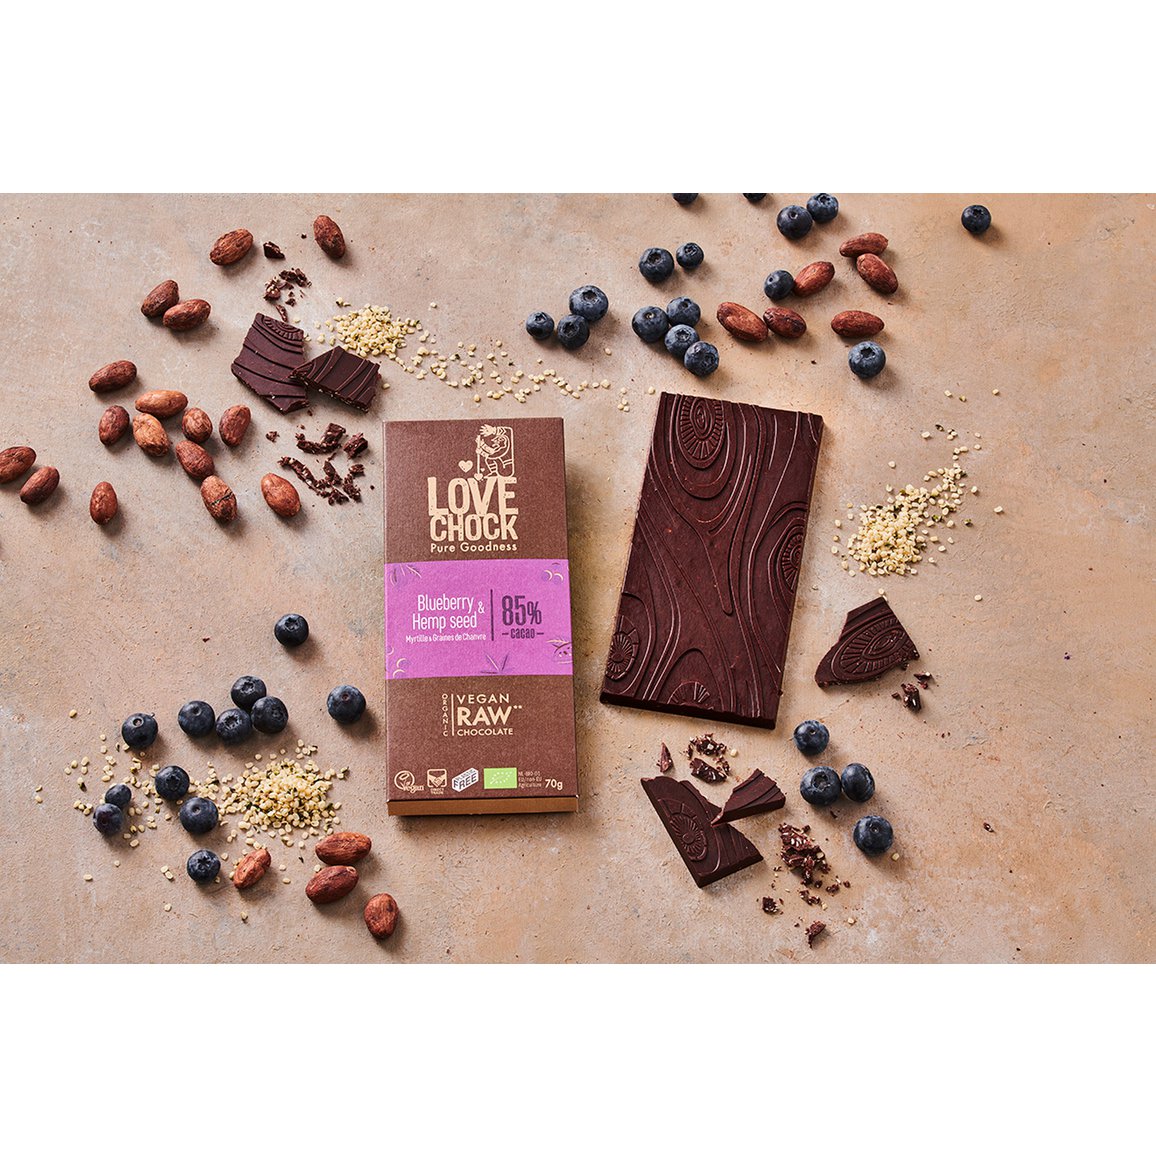 Vegan Chocolade Blueberry & Hemp seed 85% BIO